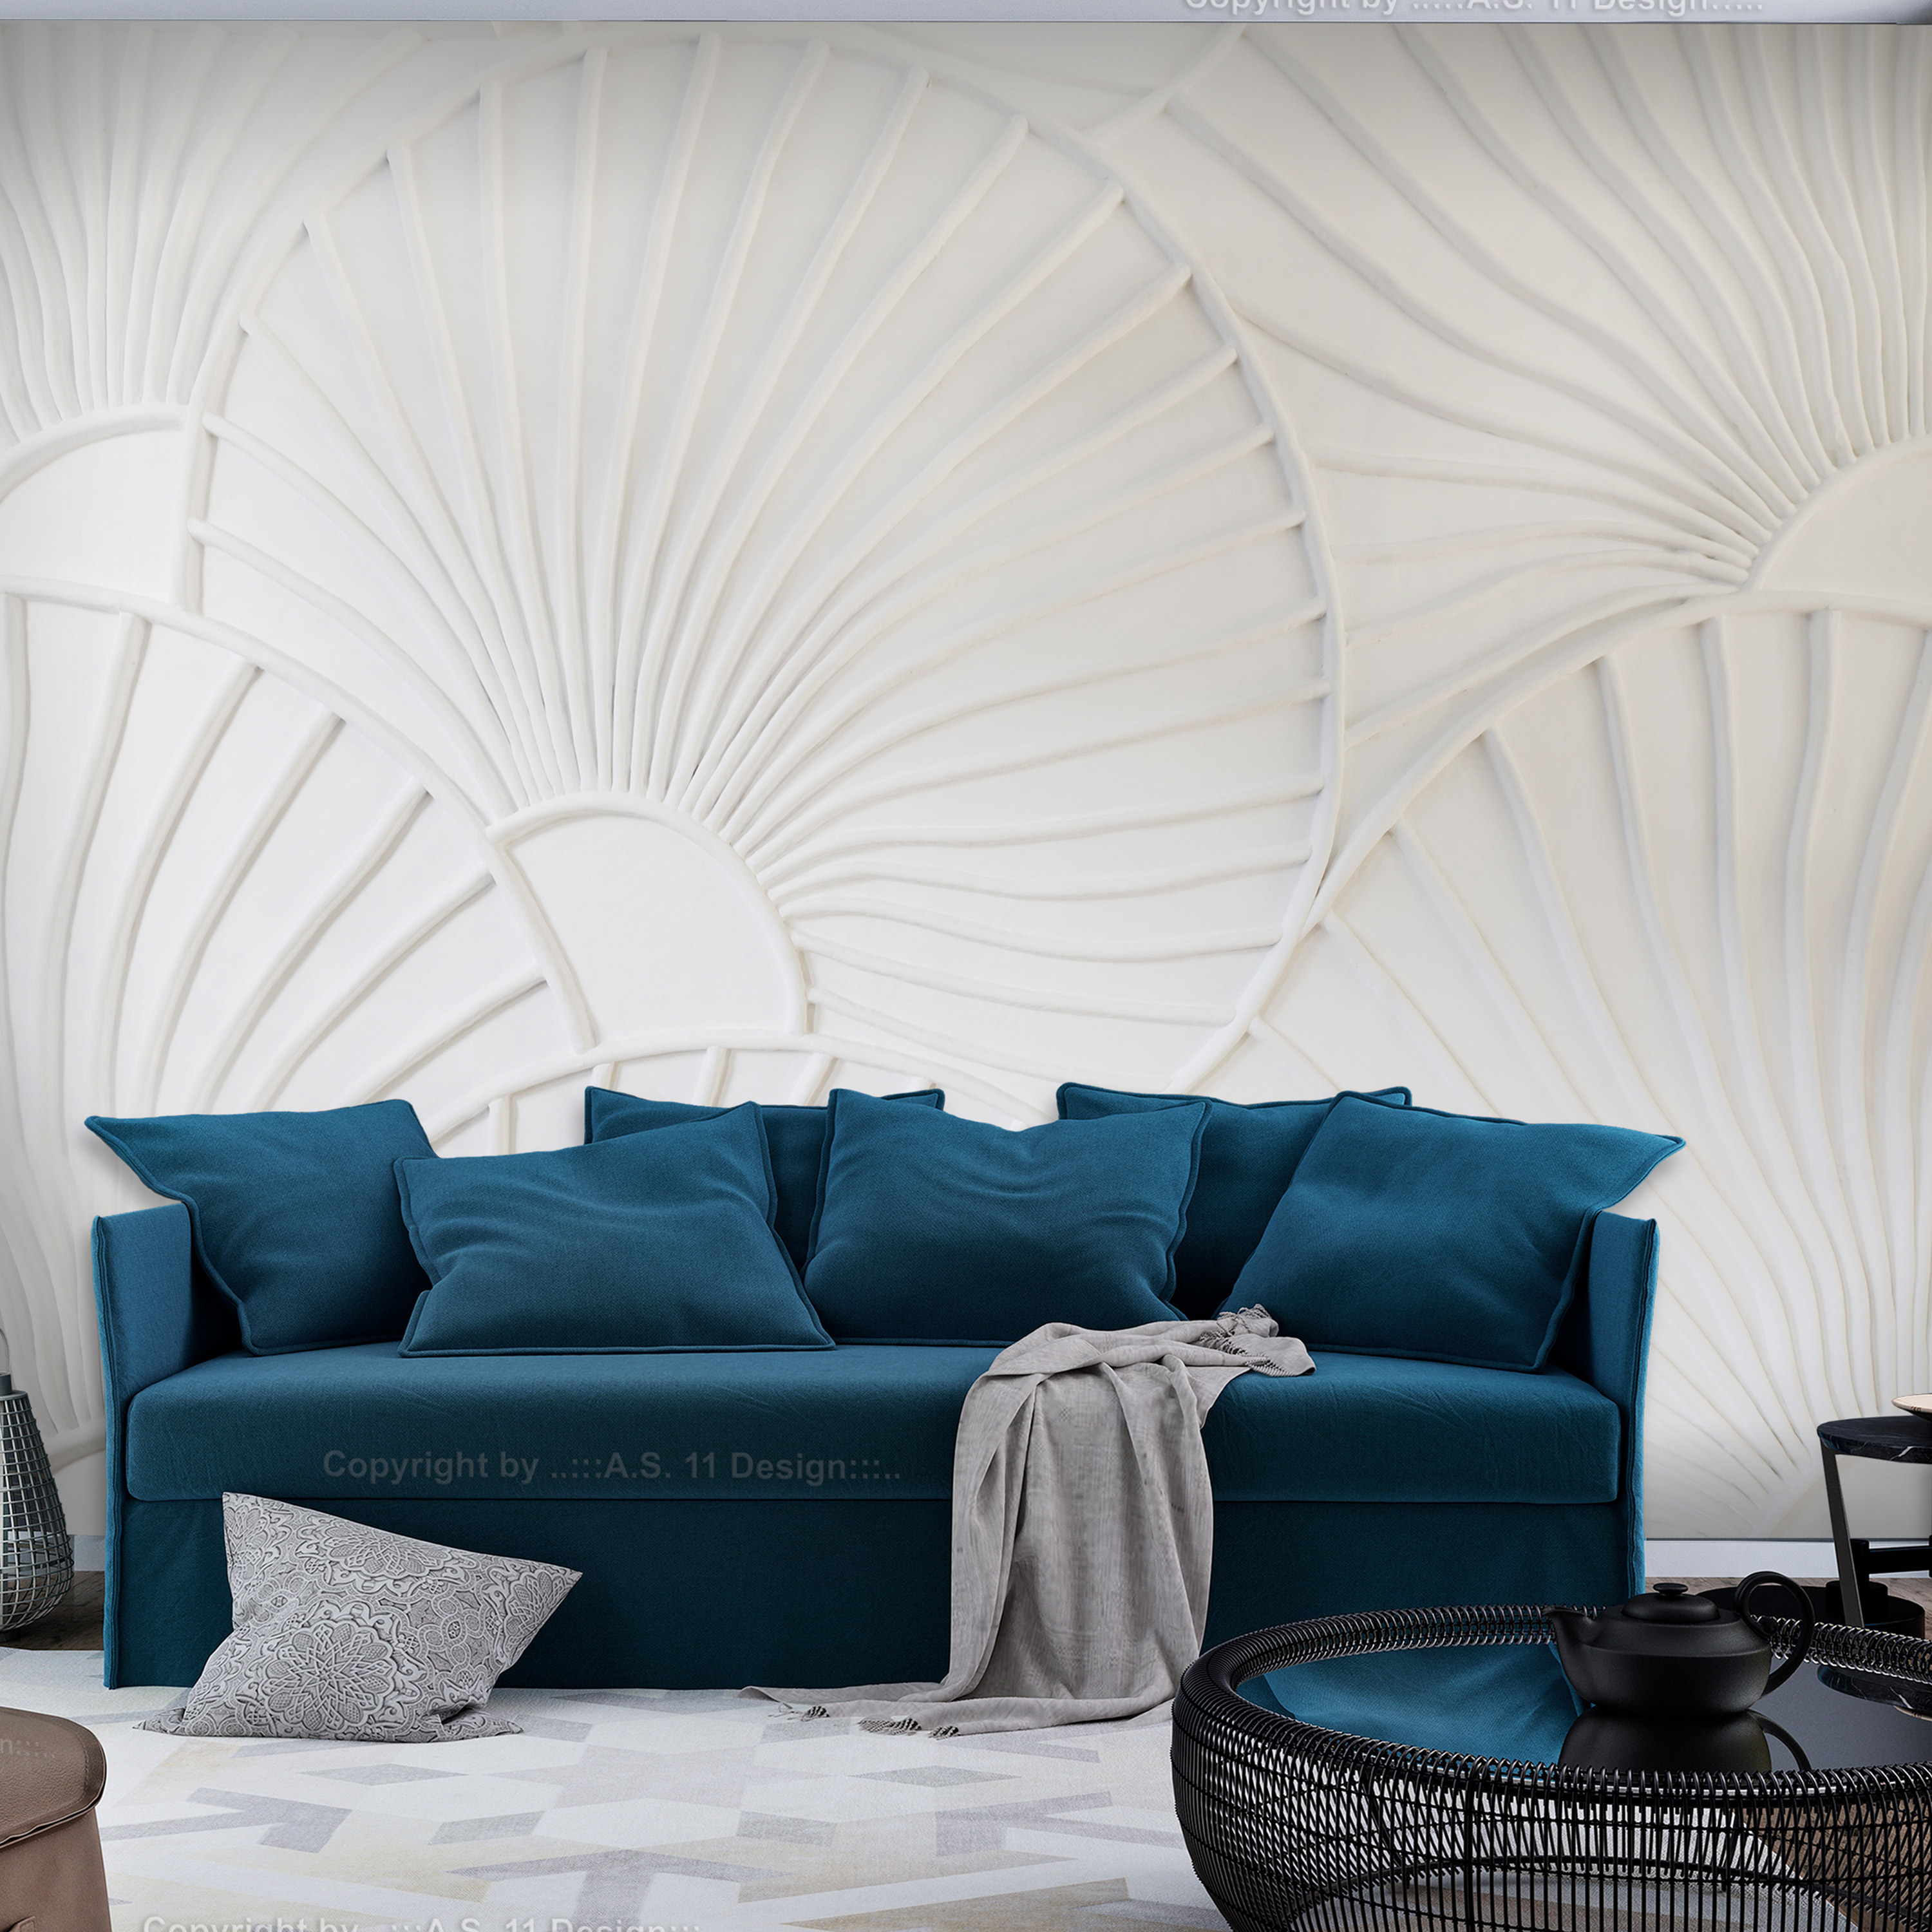 Self-adhesive Wallpaper - Windy Texture - 98x70